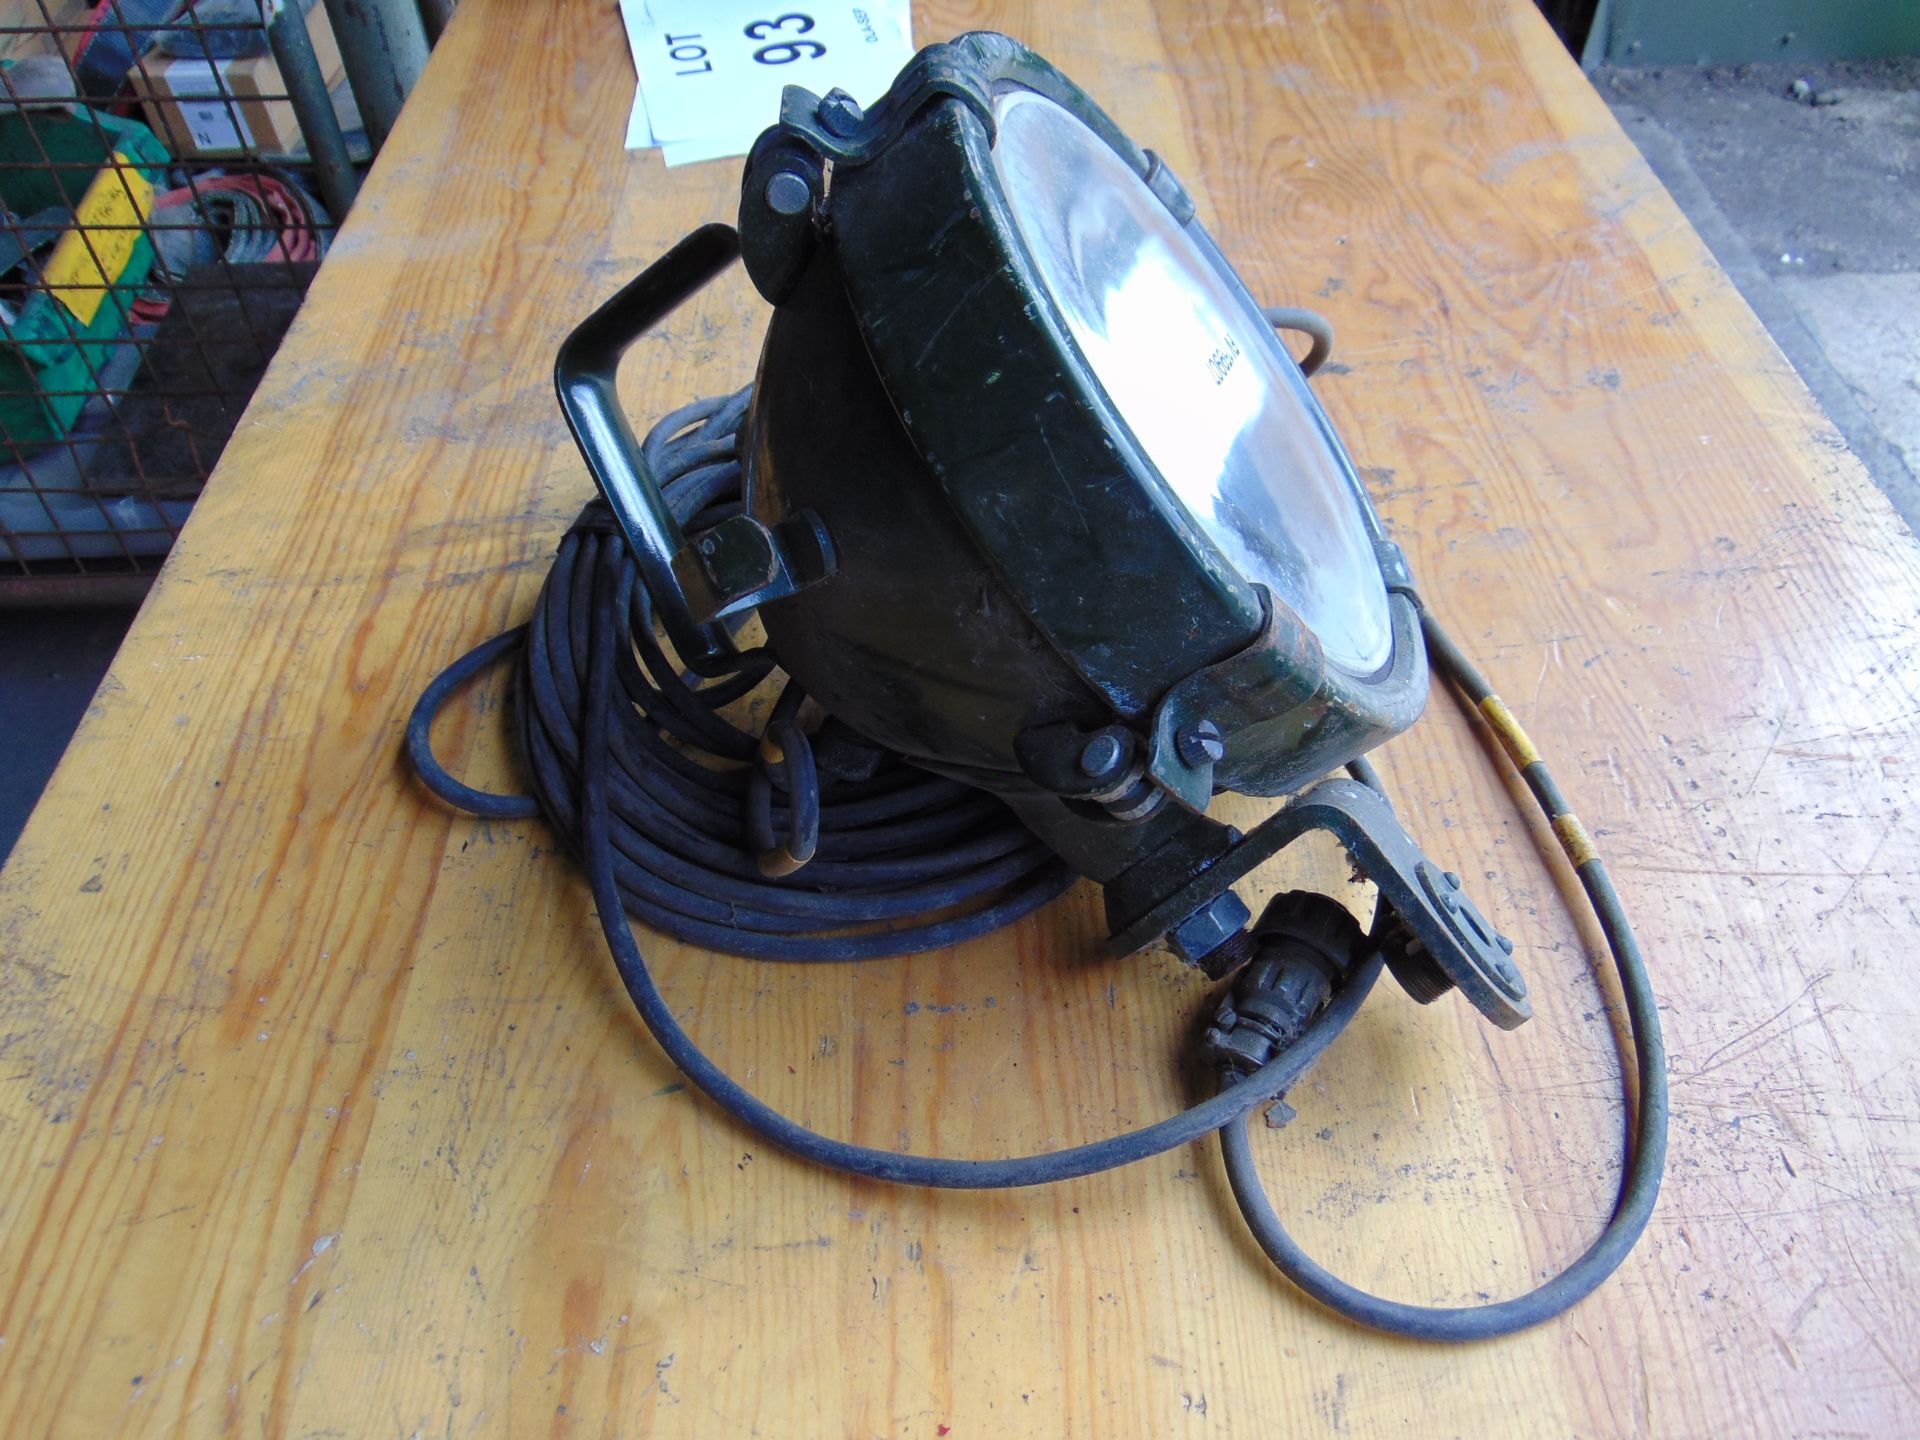 British Amy Vehicle Search Lamp c/w Bulb, Bracket, Lead plug - Image 3 of 7